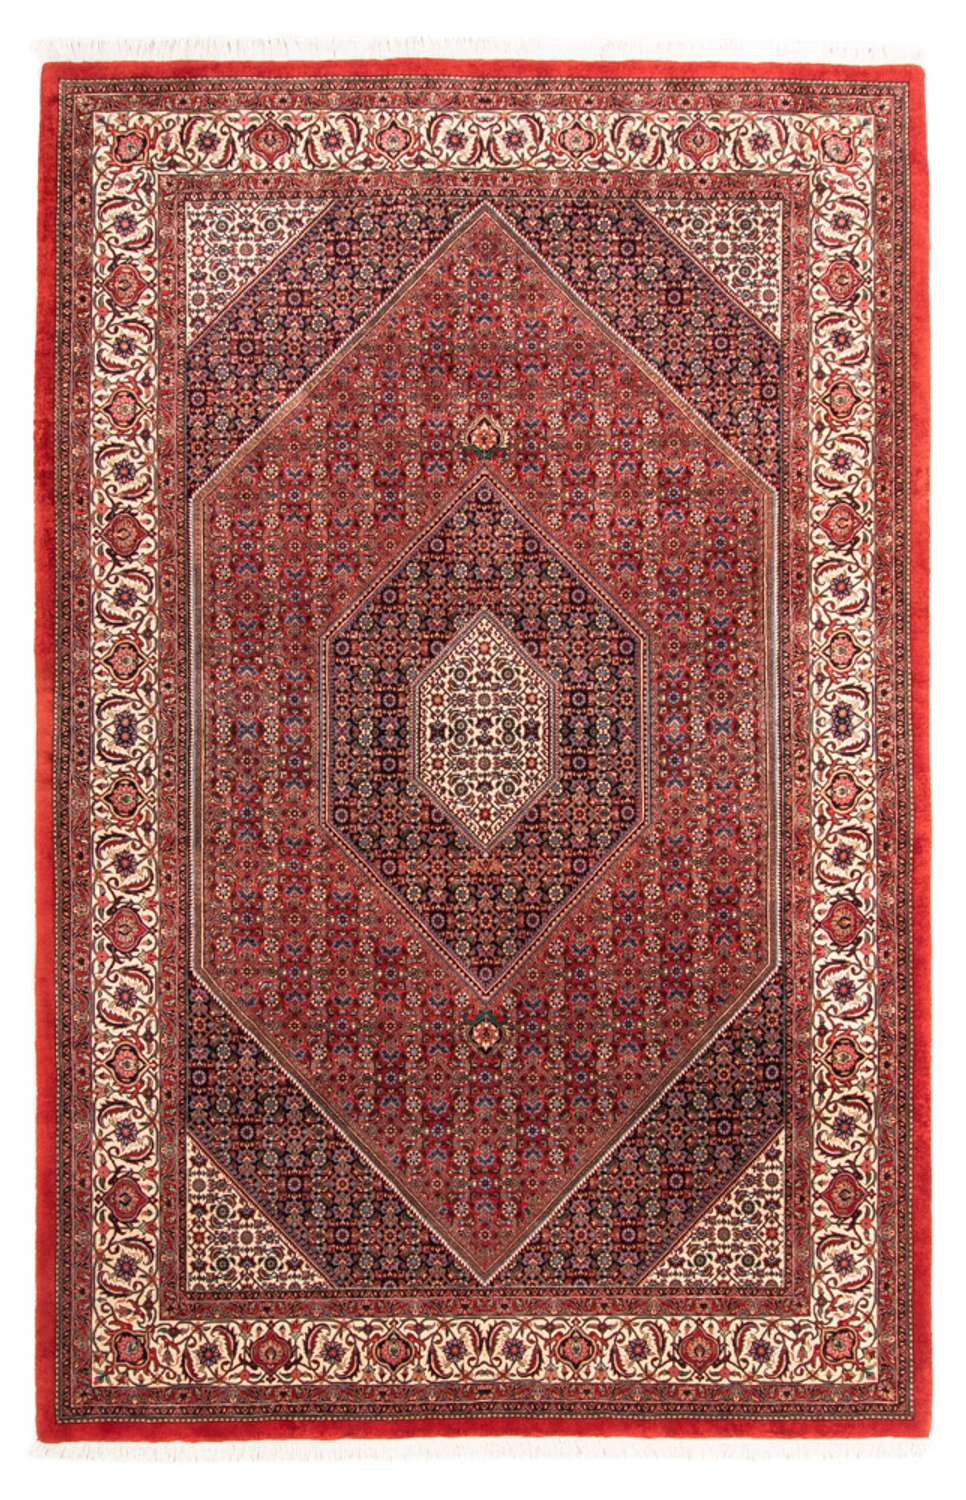 Tapis persan - Bidjar - 310 x 205 cm - rouge